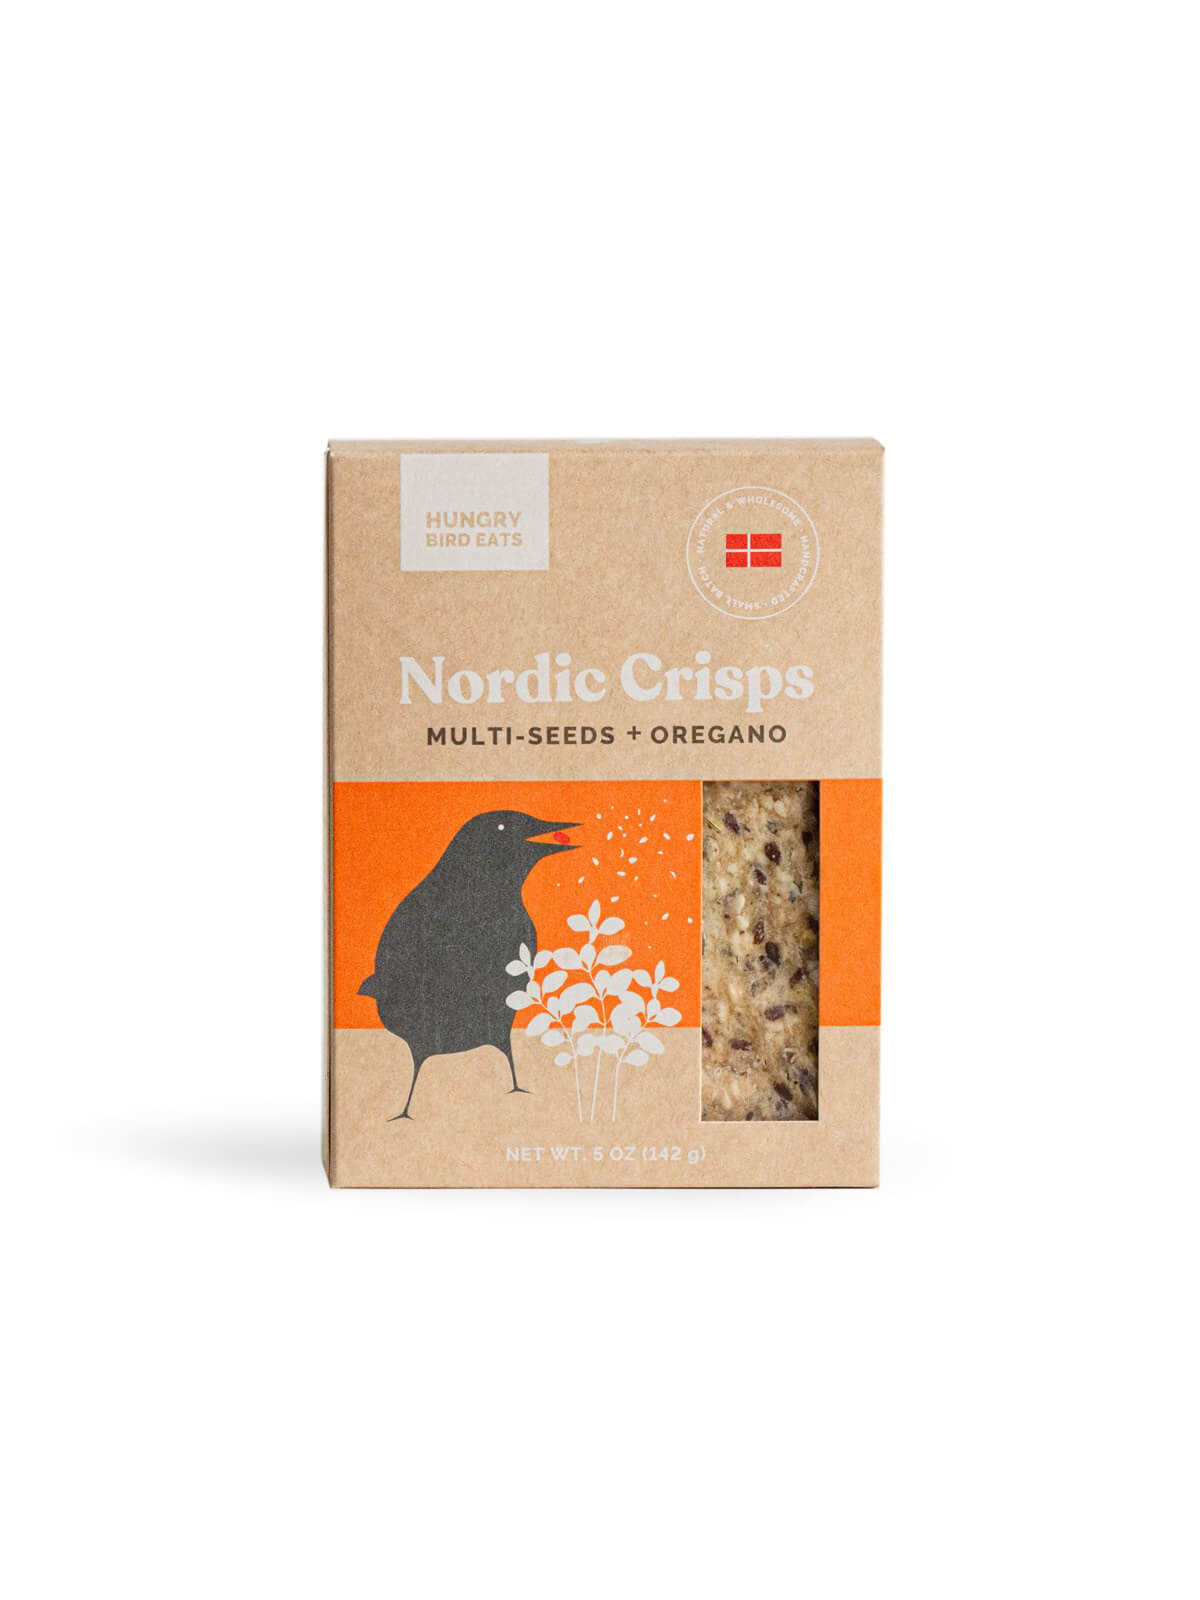 MULTI-SEEDS + OREGANO - Nordic Crisps - Hungry Bird Eats - Mitzie Mee Shop